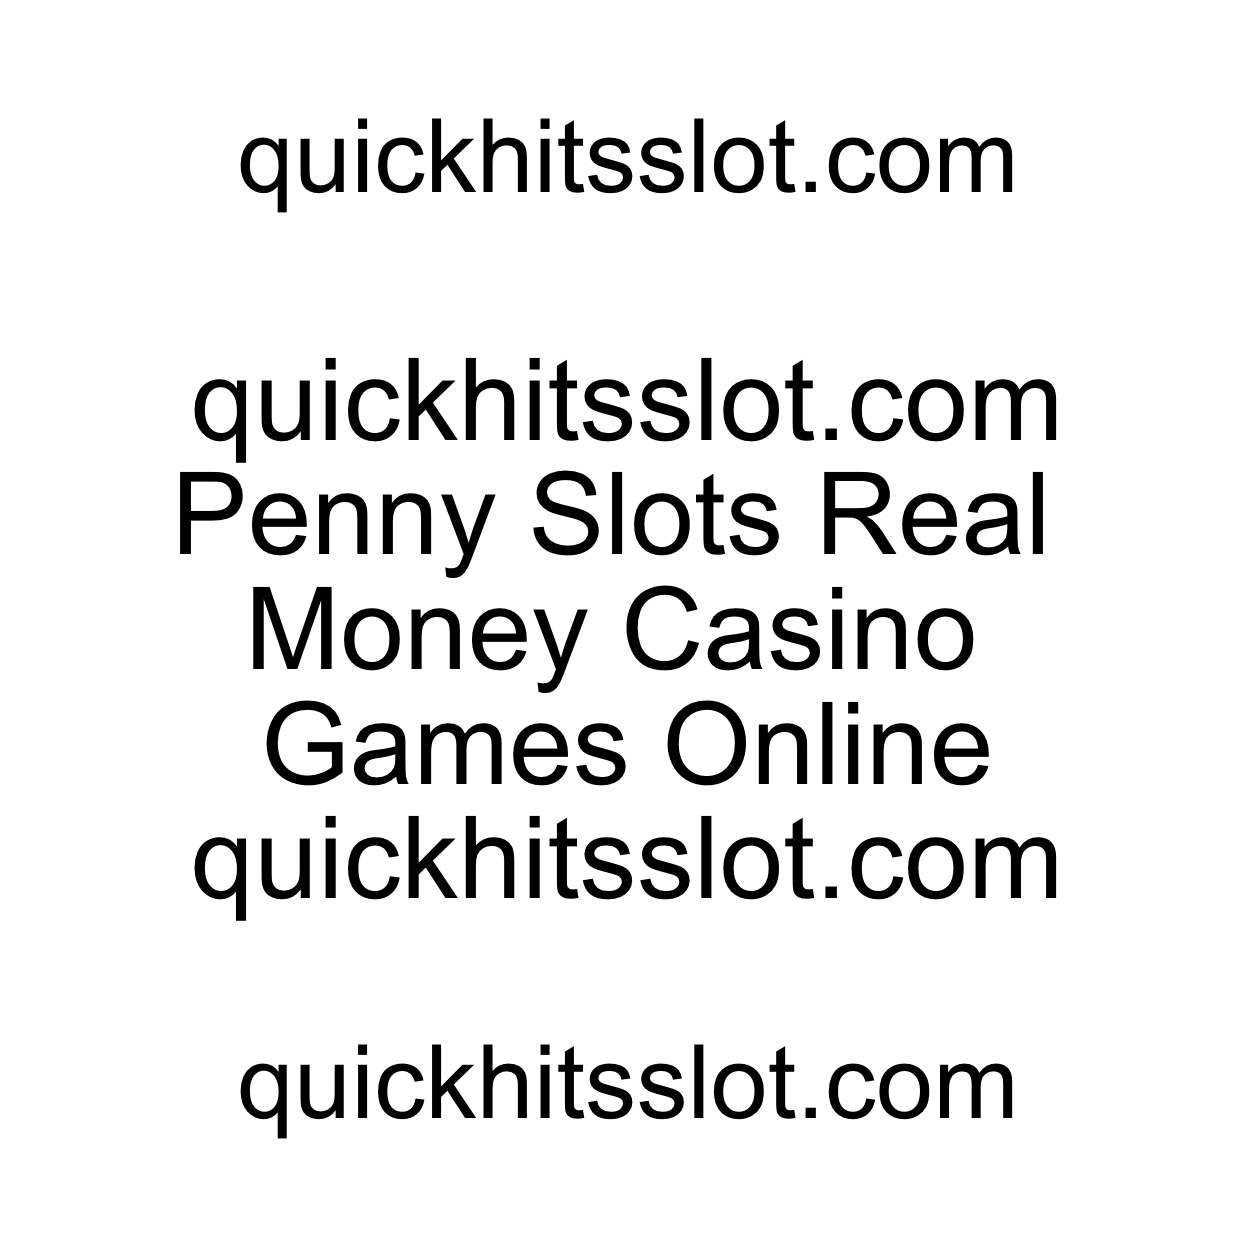 Penny Slots Real Money Casino Games Online quickhitsslot.com